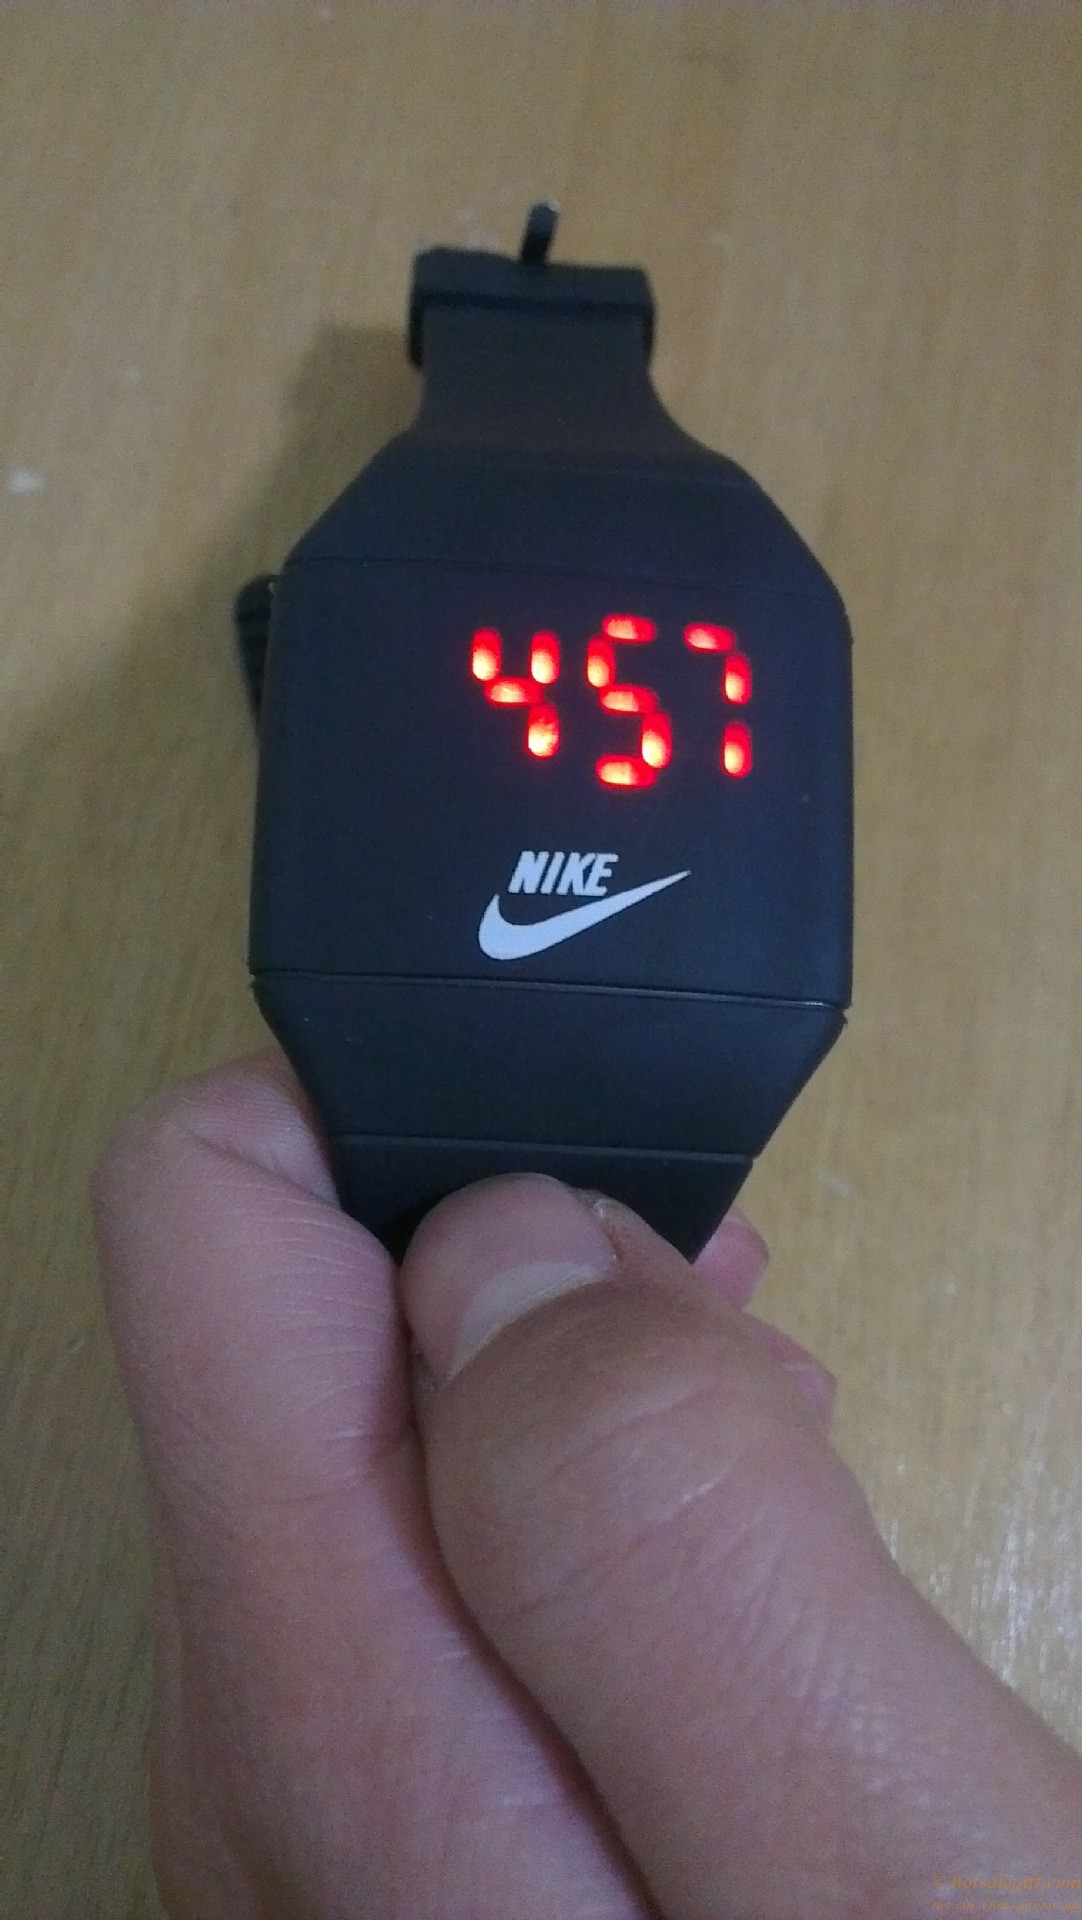 hotsalegift ultrathin touch screen led watch gift watch 8